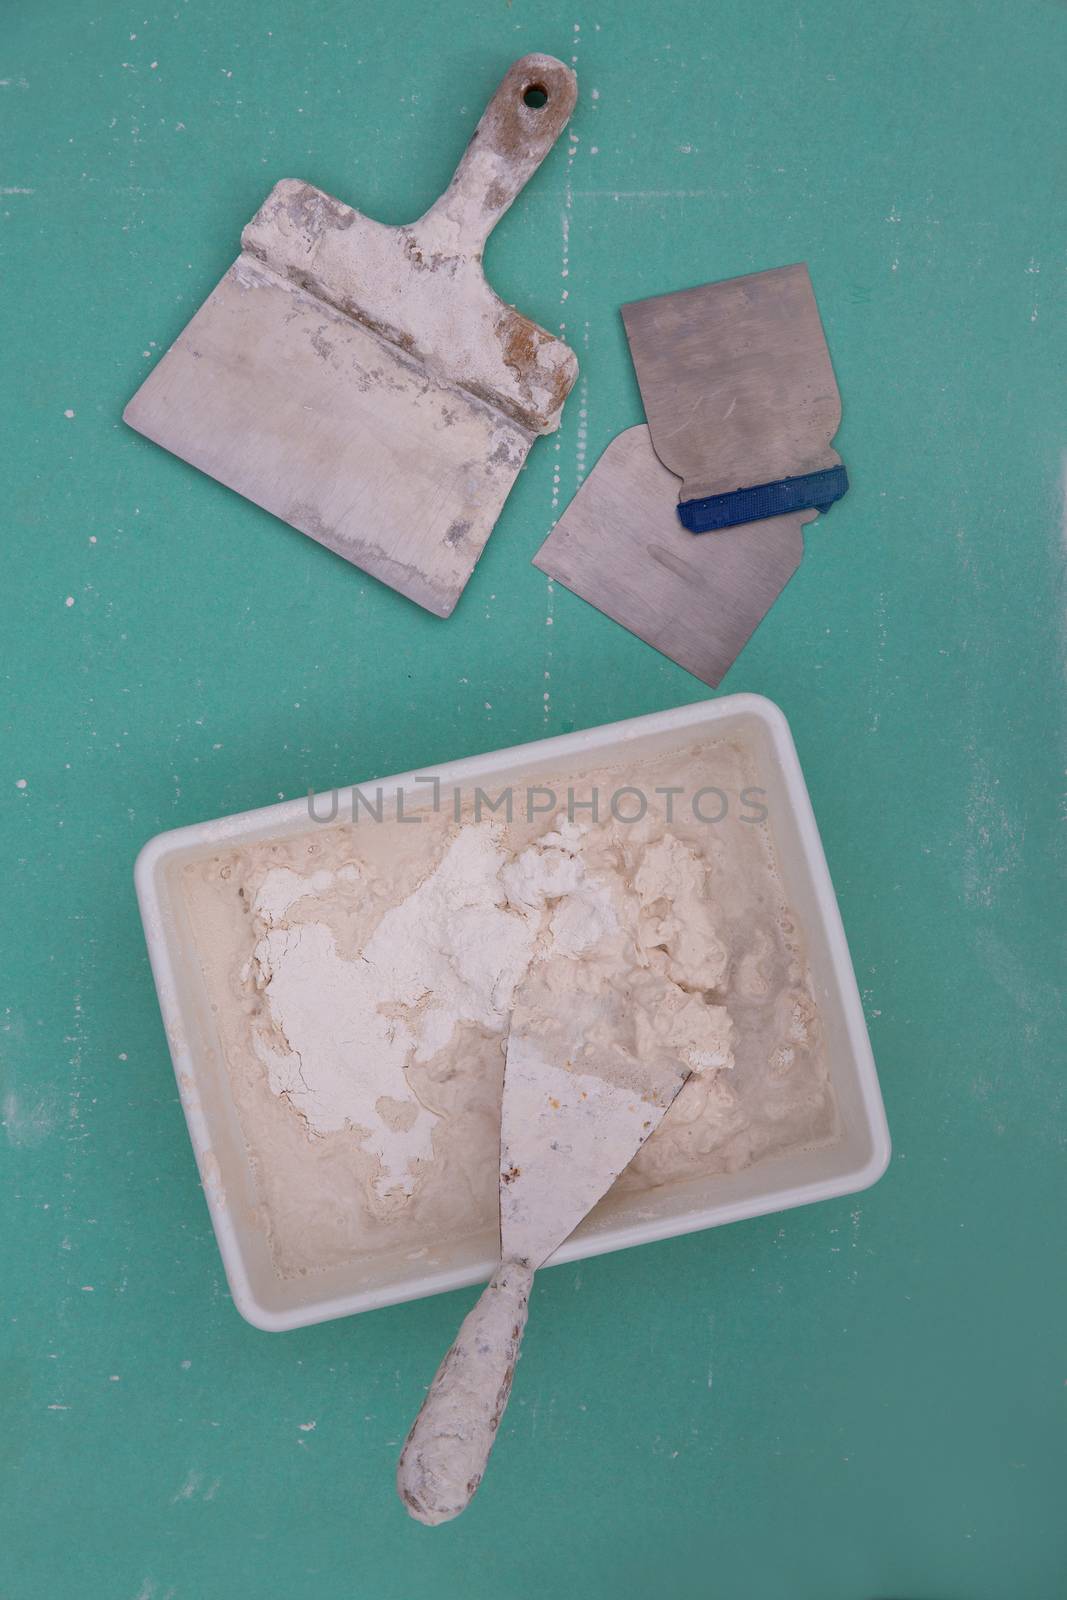 Platering tools for plaster like plaste trowel spatula by lunamarina